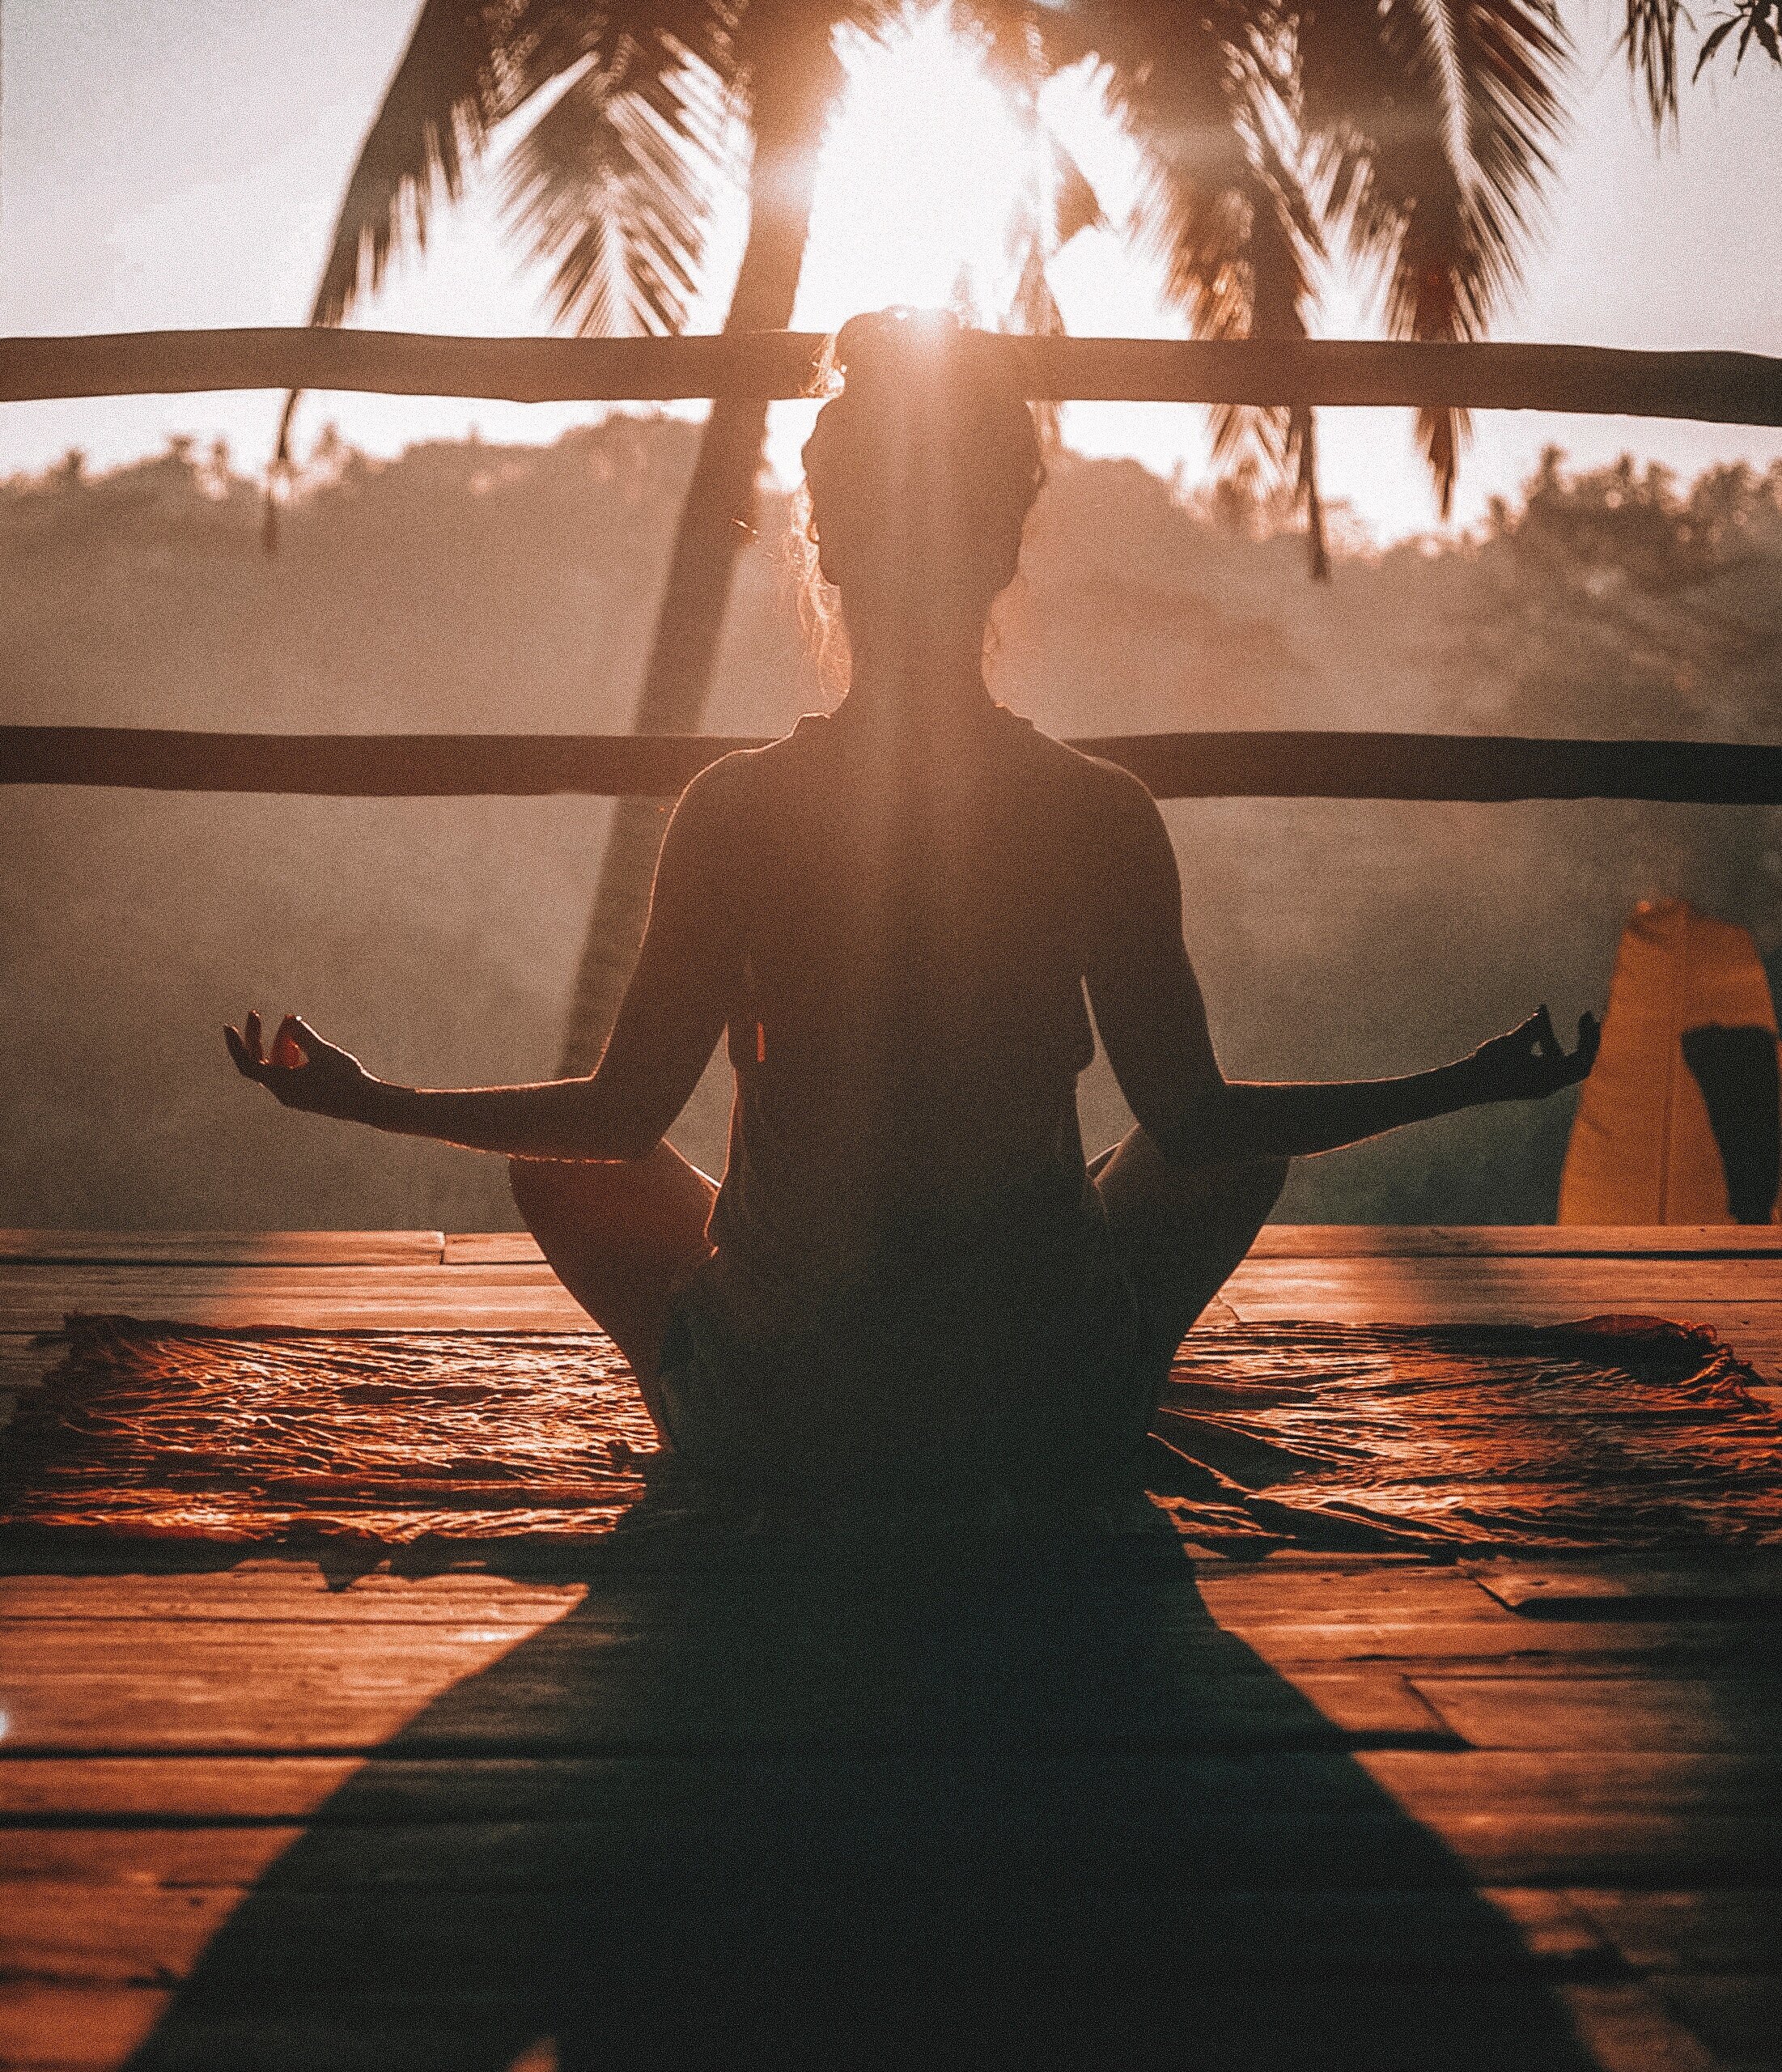   Meditation and Yoga